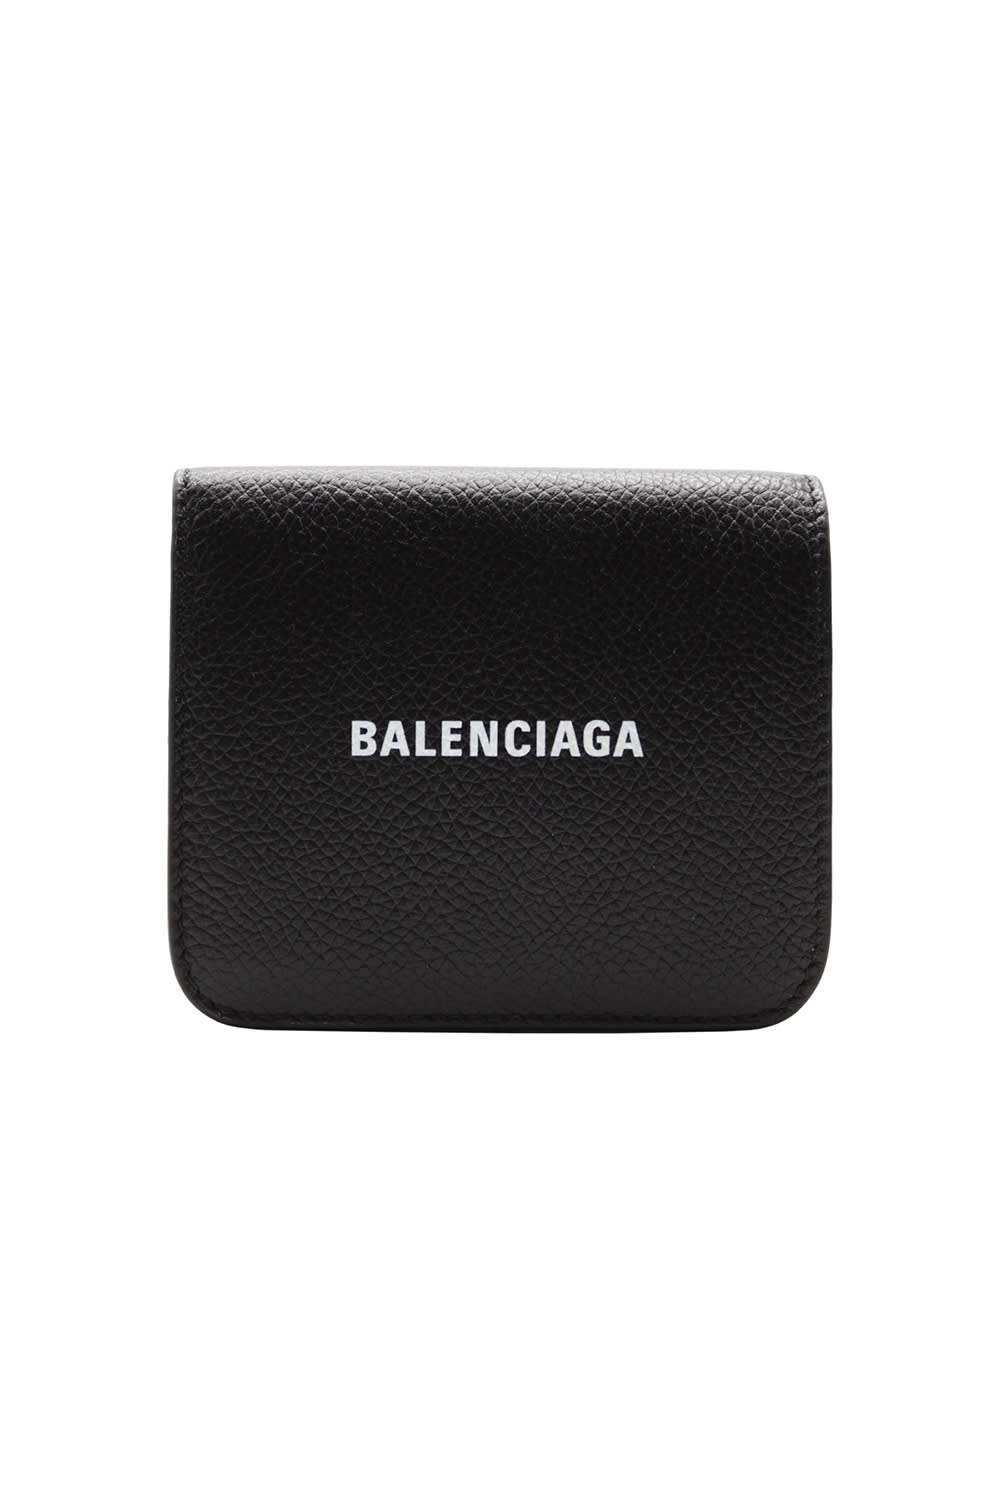 BALENCIAGA CASH FLAP COIN AND CARD HOLDER